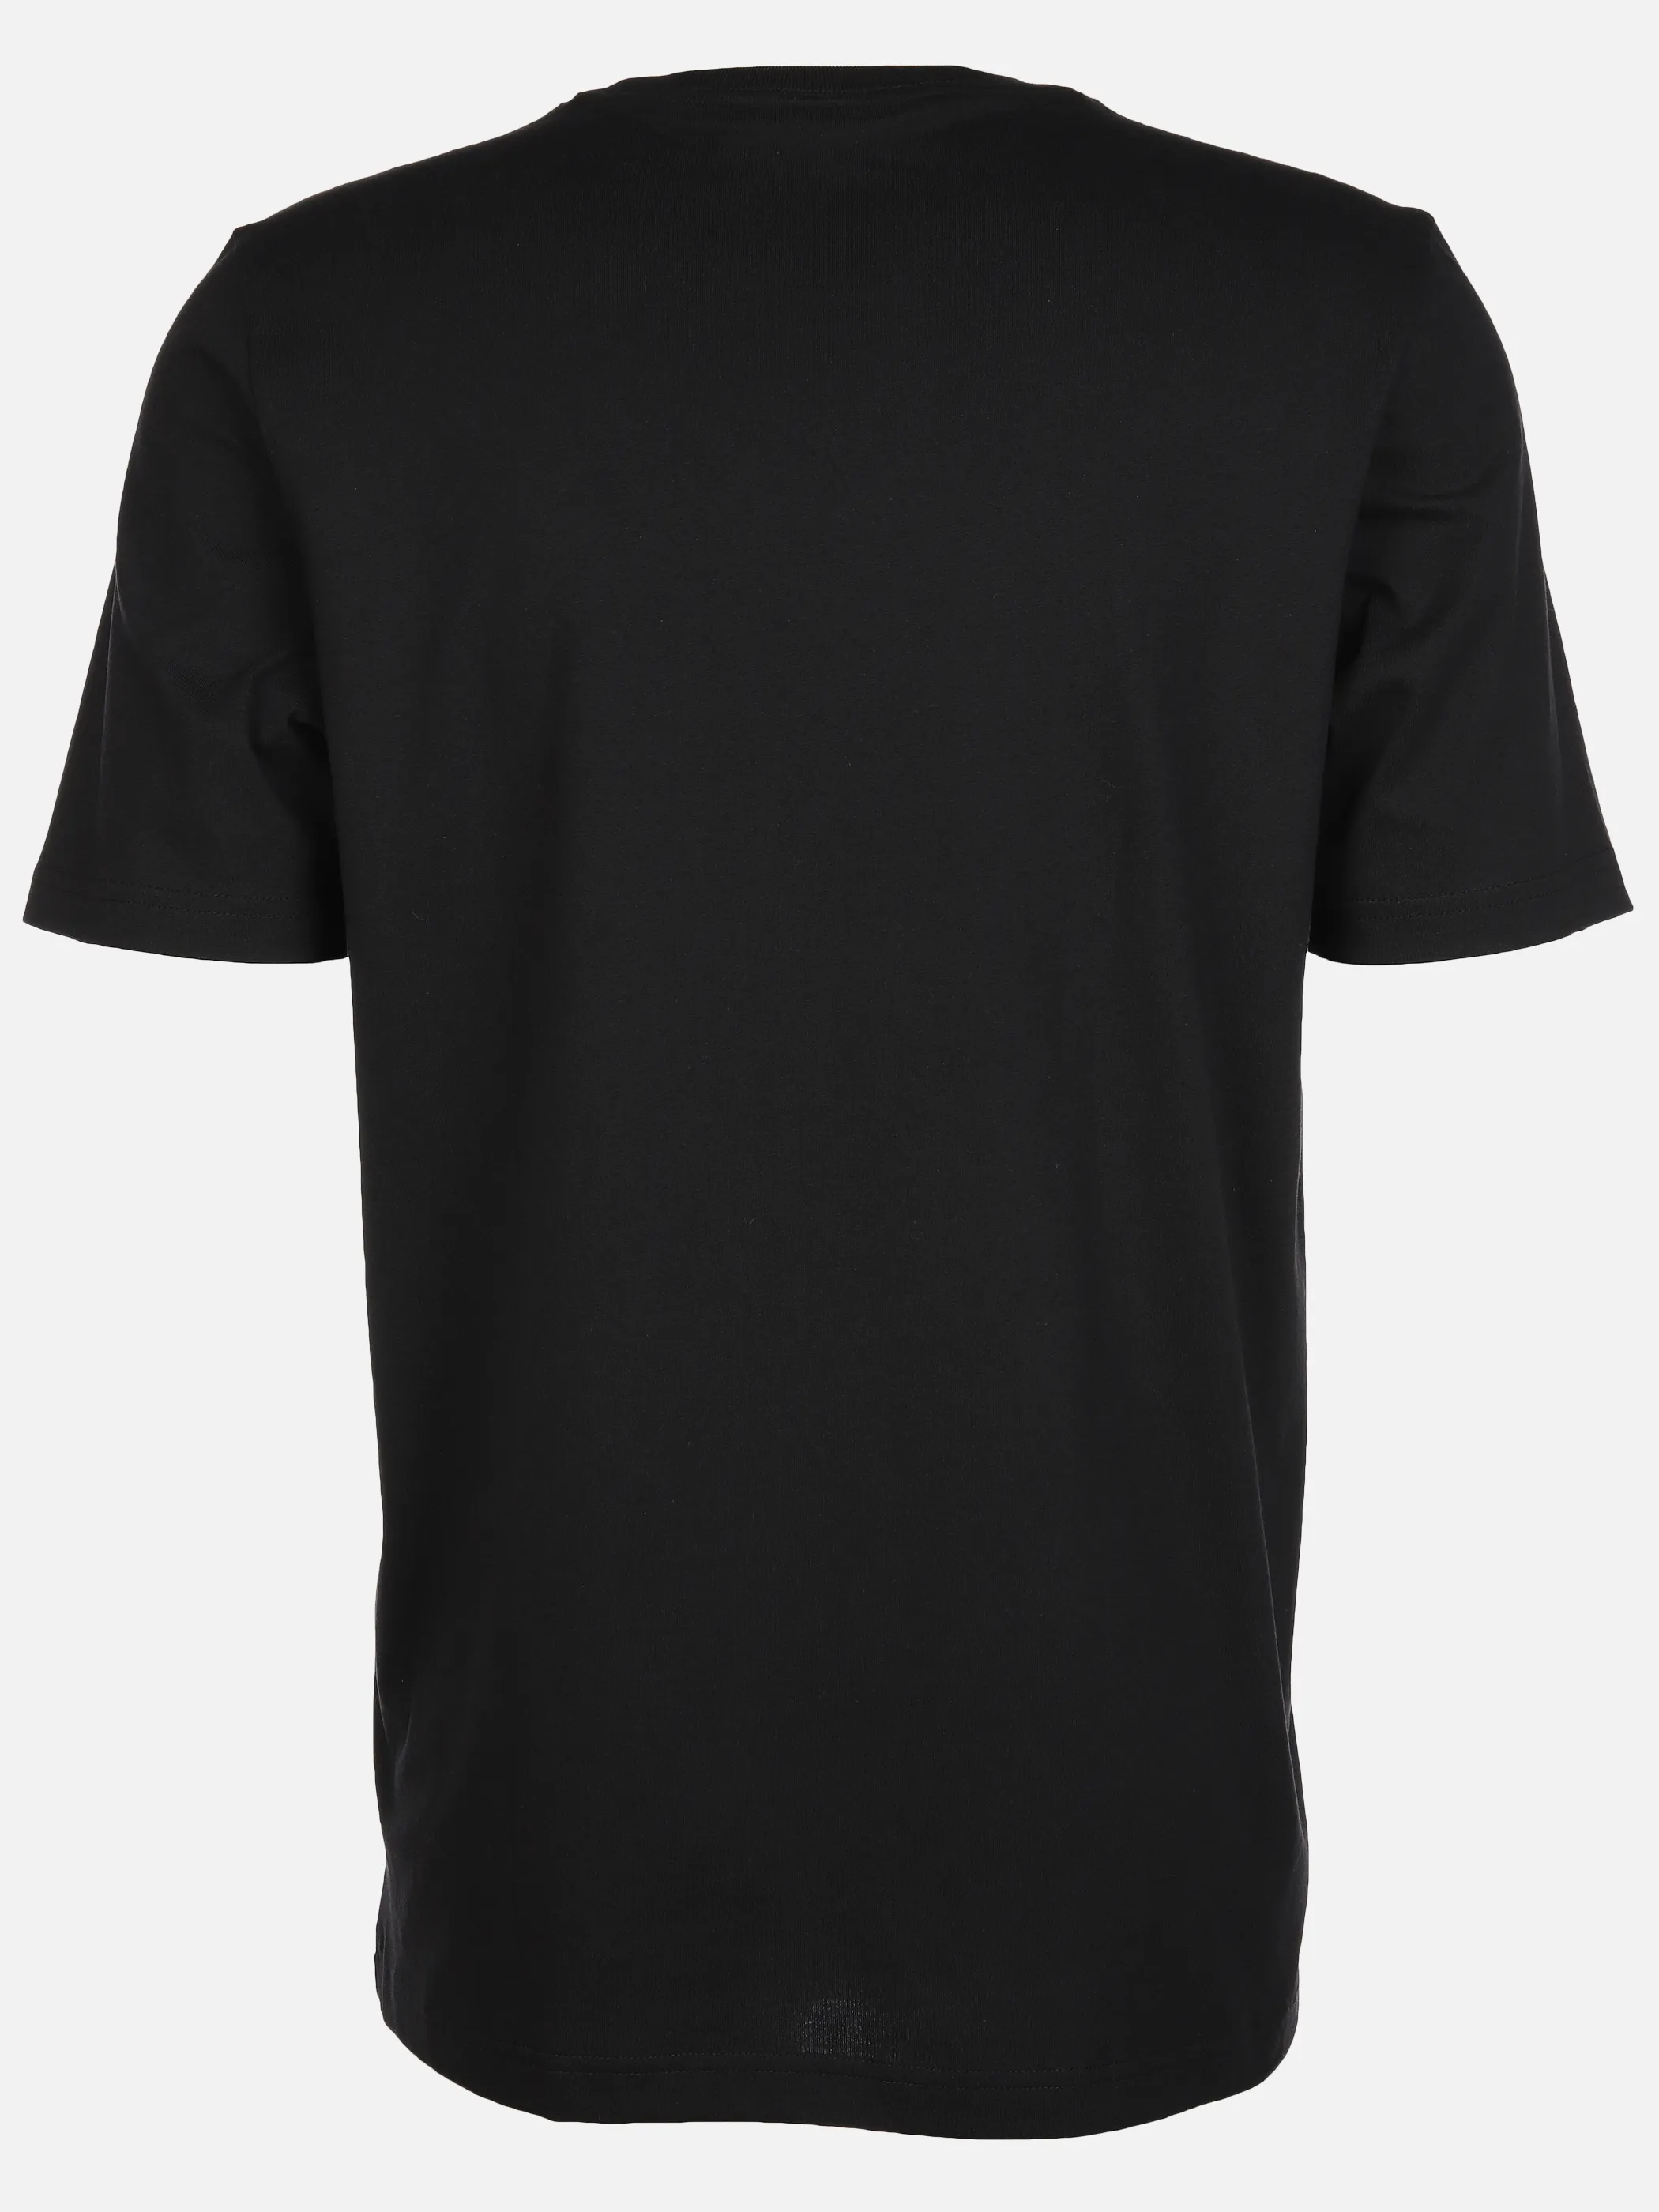 Adidas IC9282 He-T-Shirt schwarz Schwarz 898902 000 2